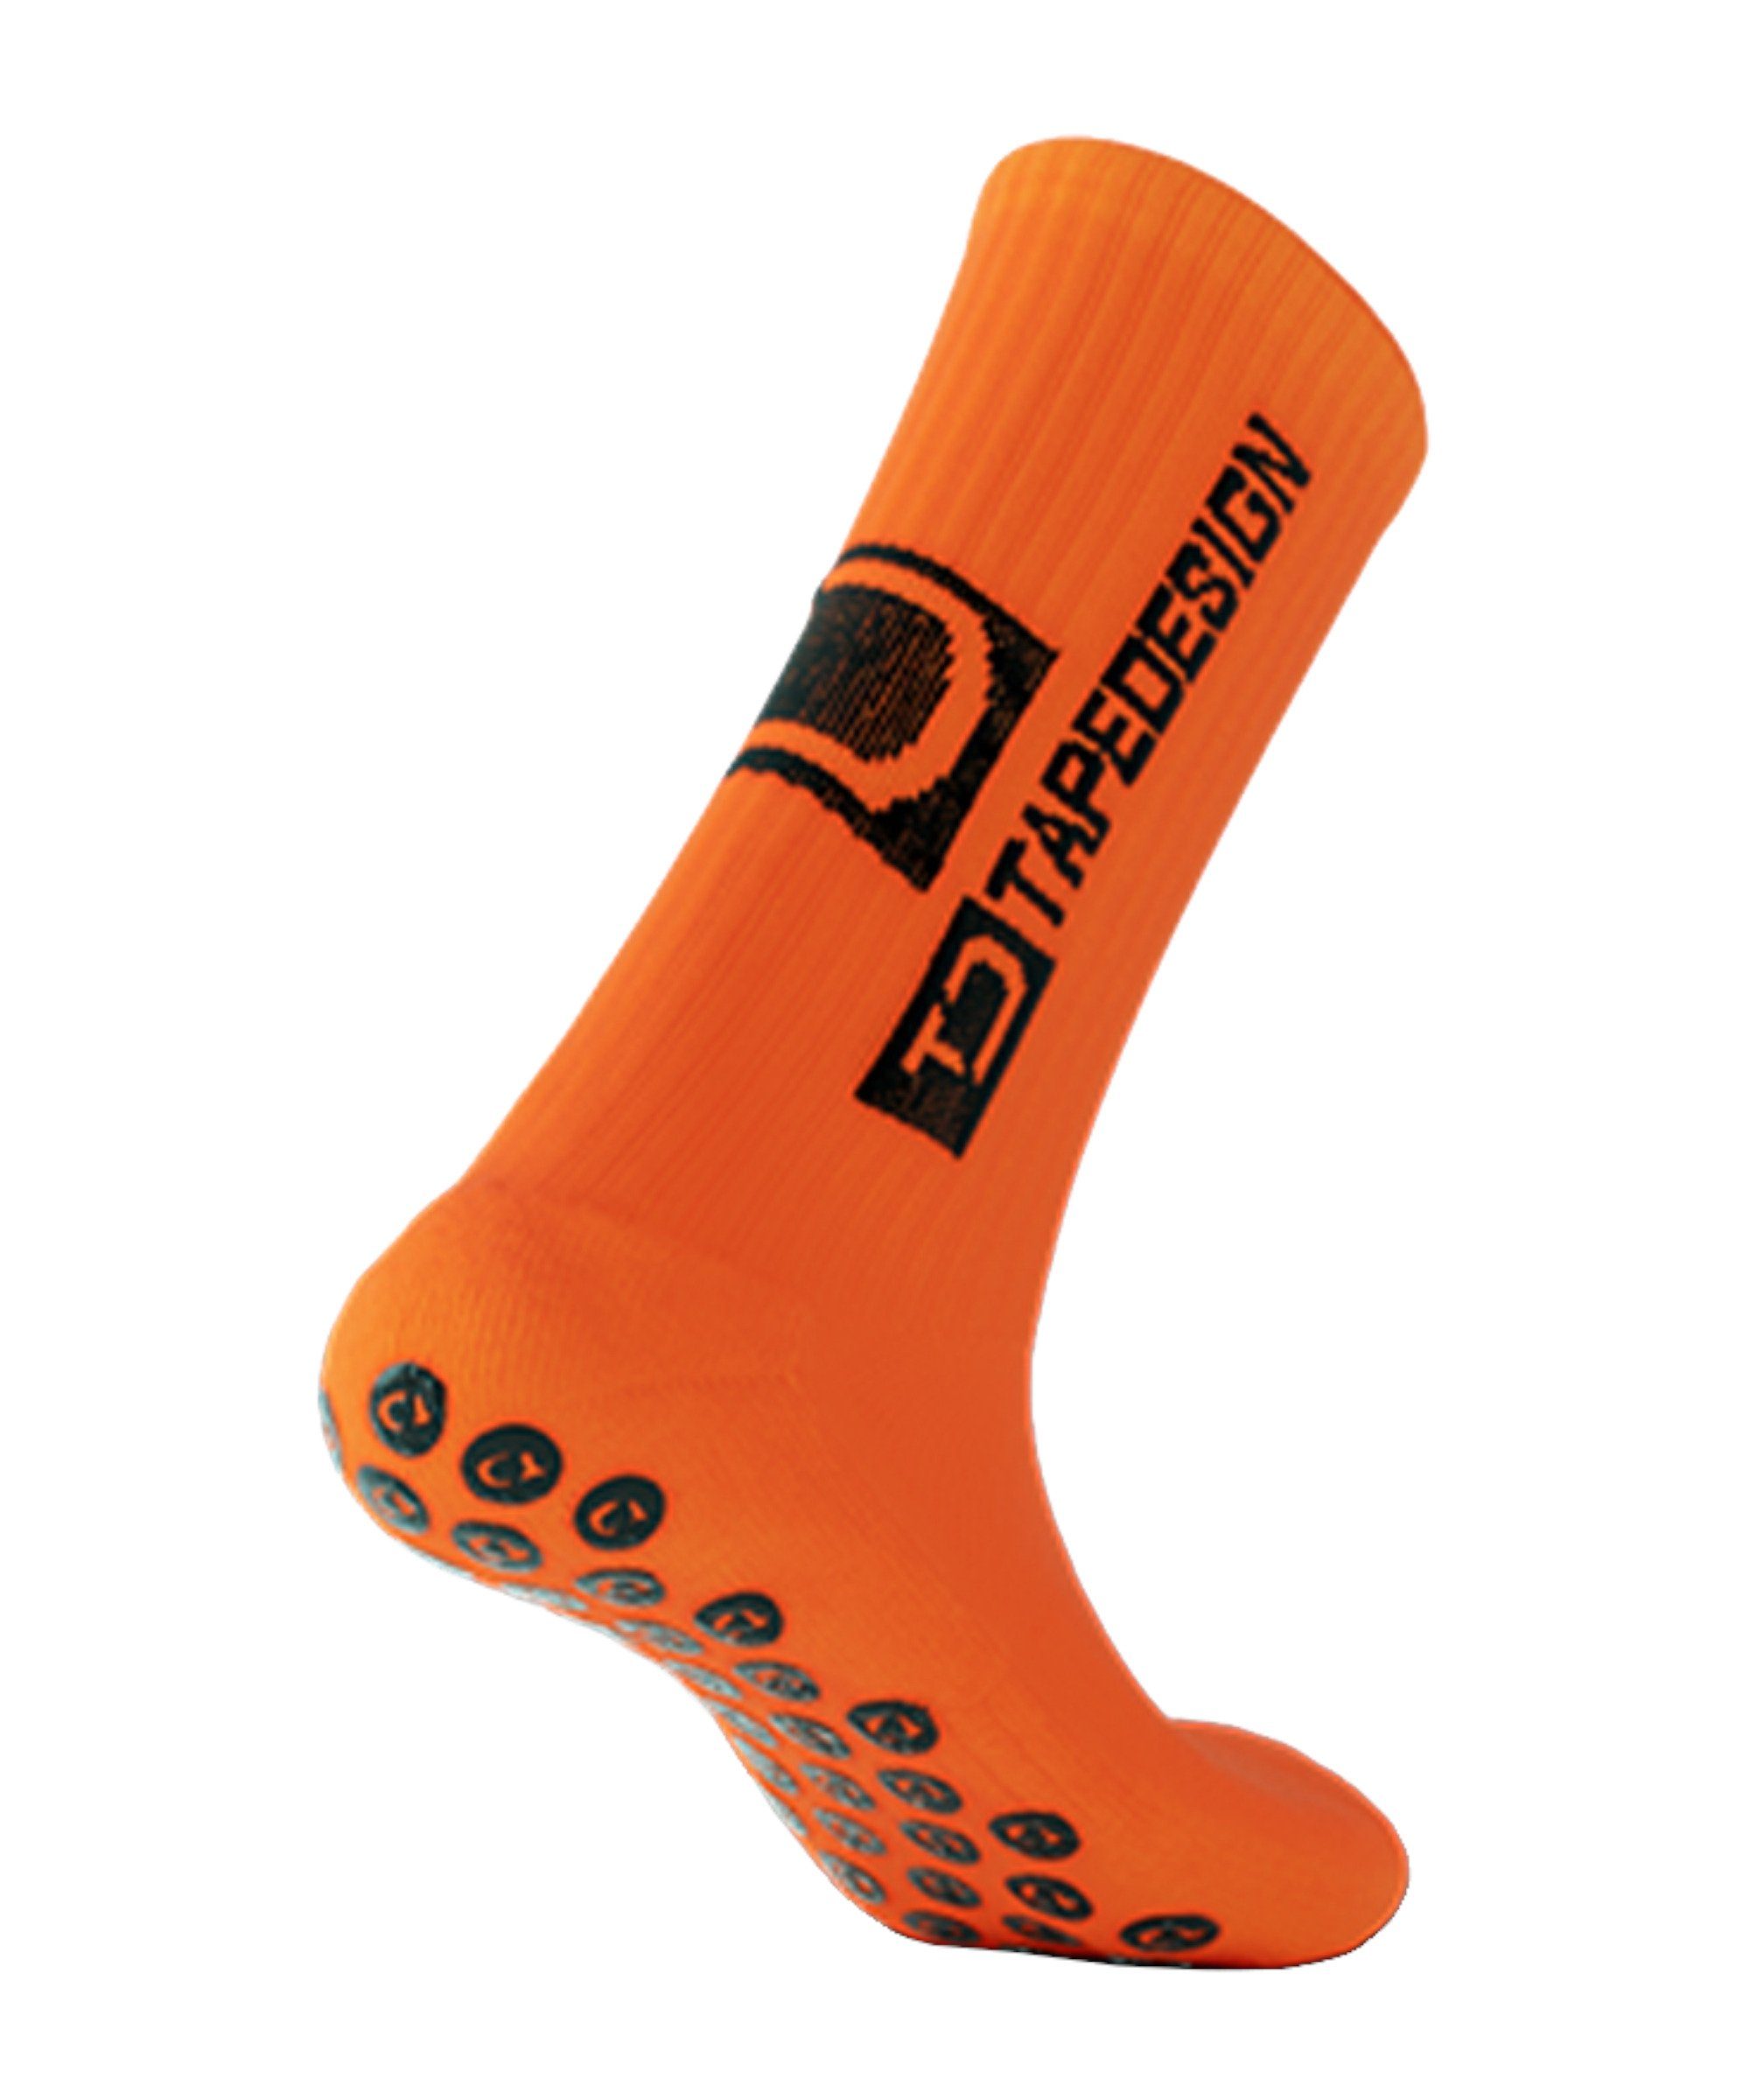 Tapedesign Gripsocks Socken Sportsocken orangeschwarz default